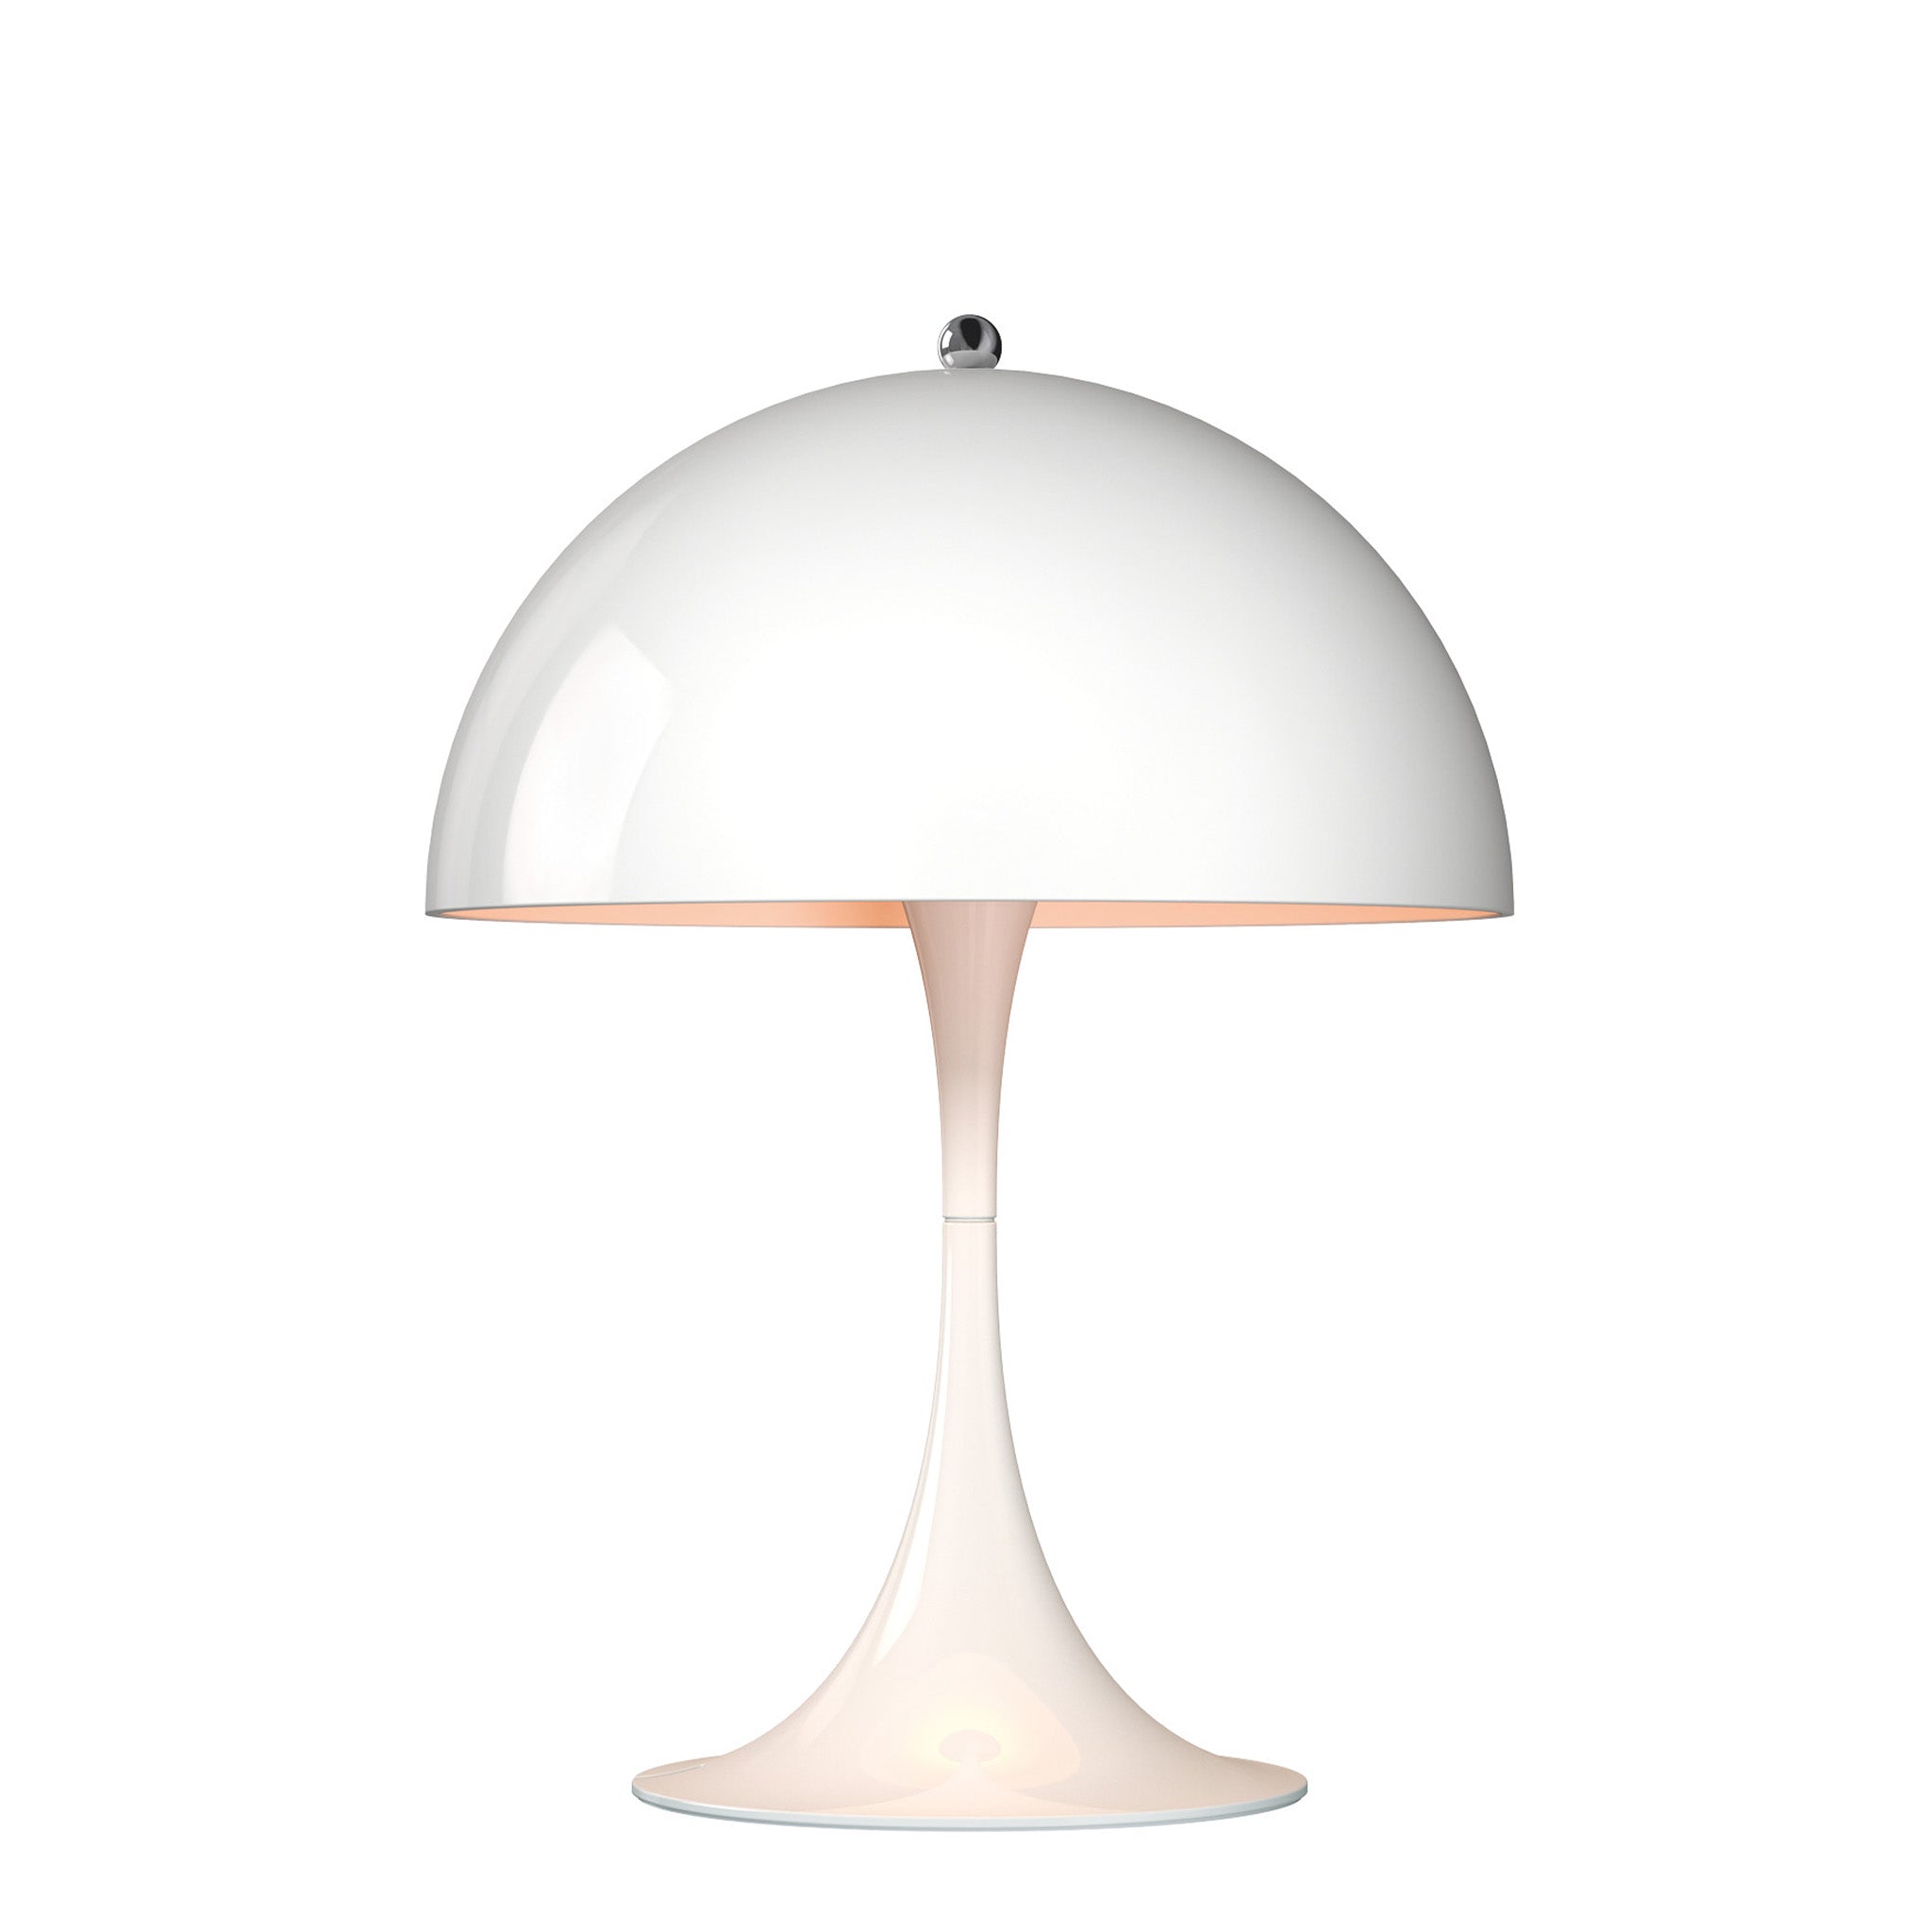 Panthella 250 Table Lamp by Verner Panton